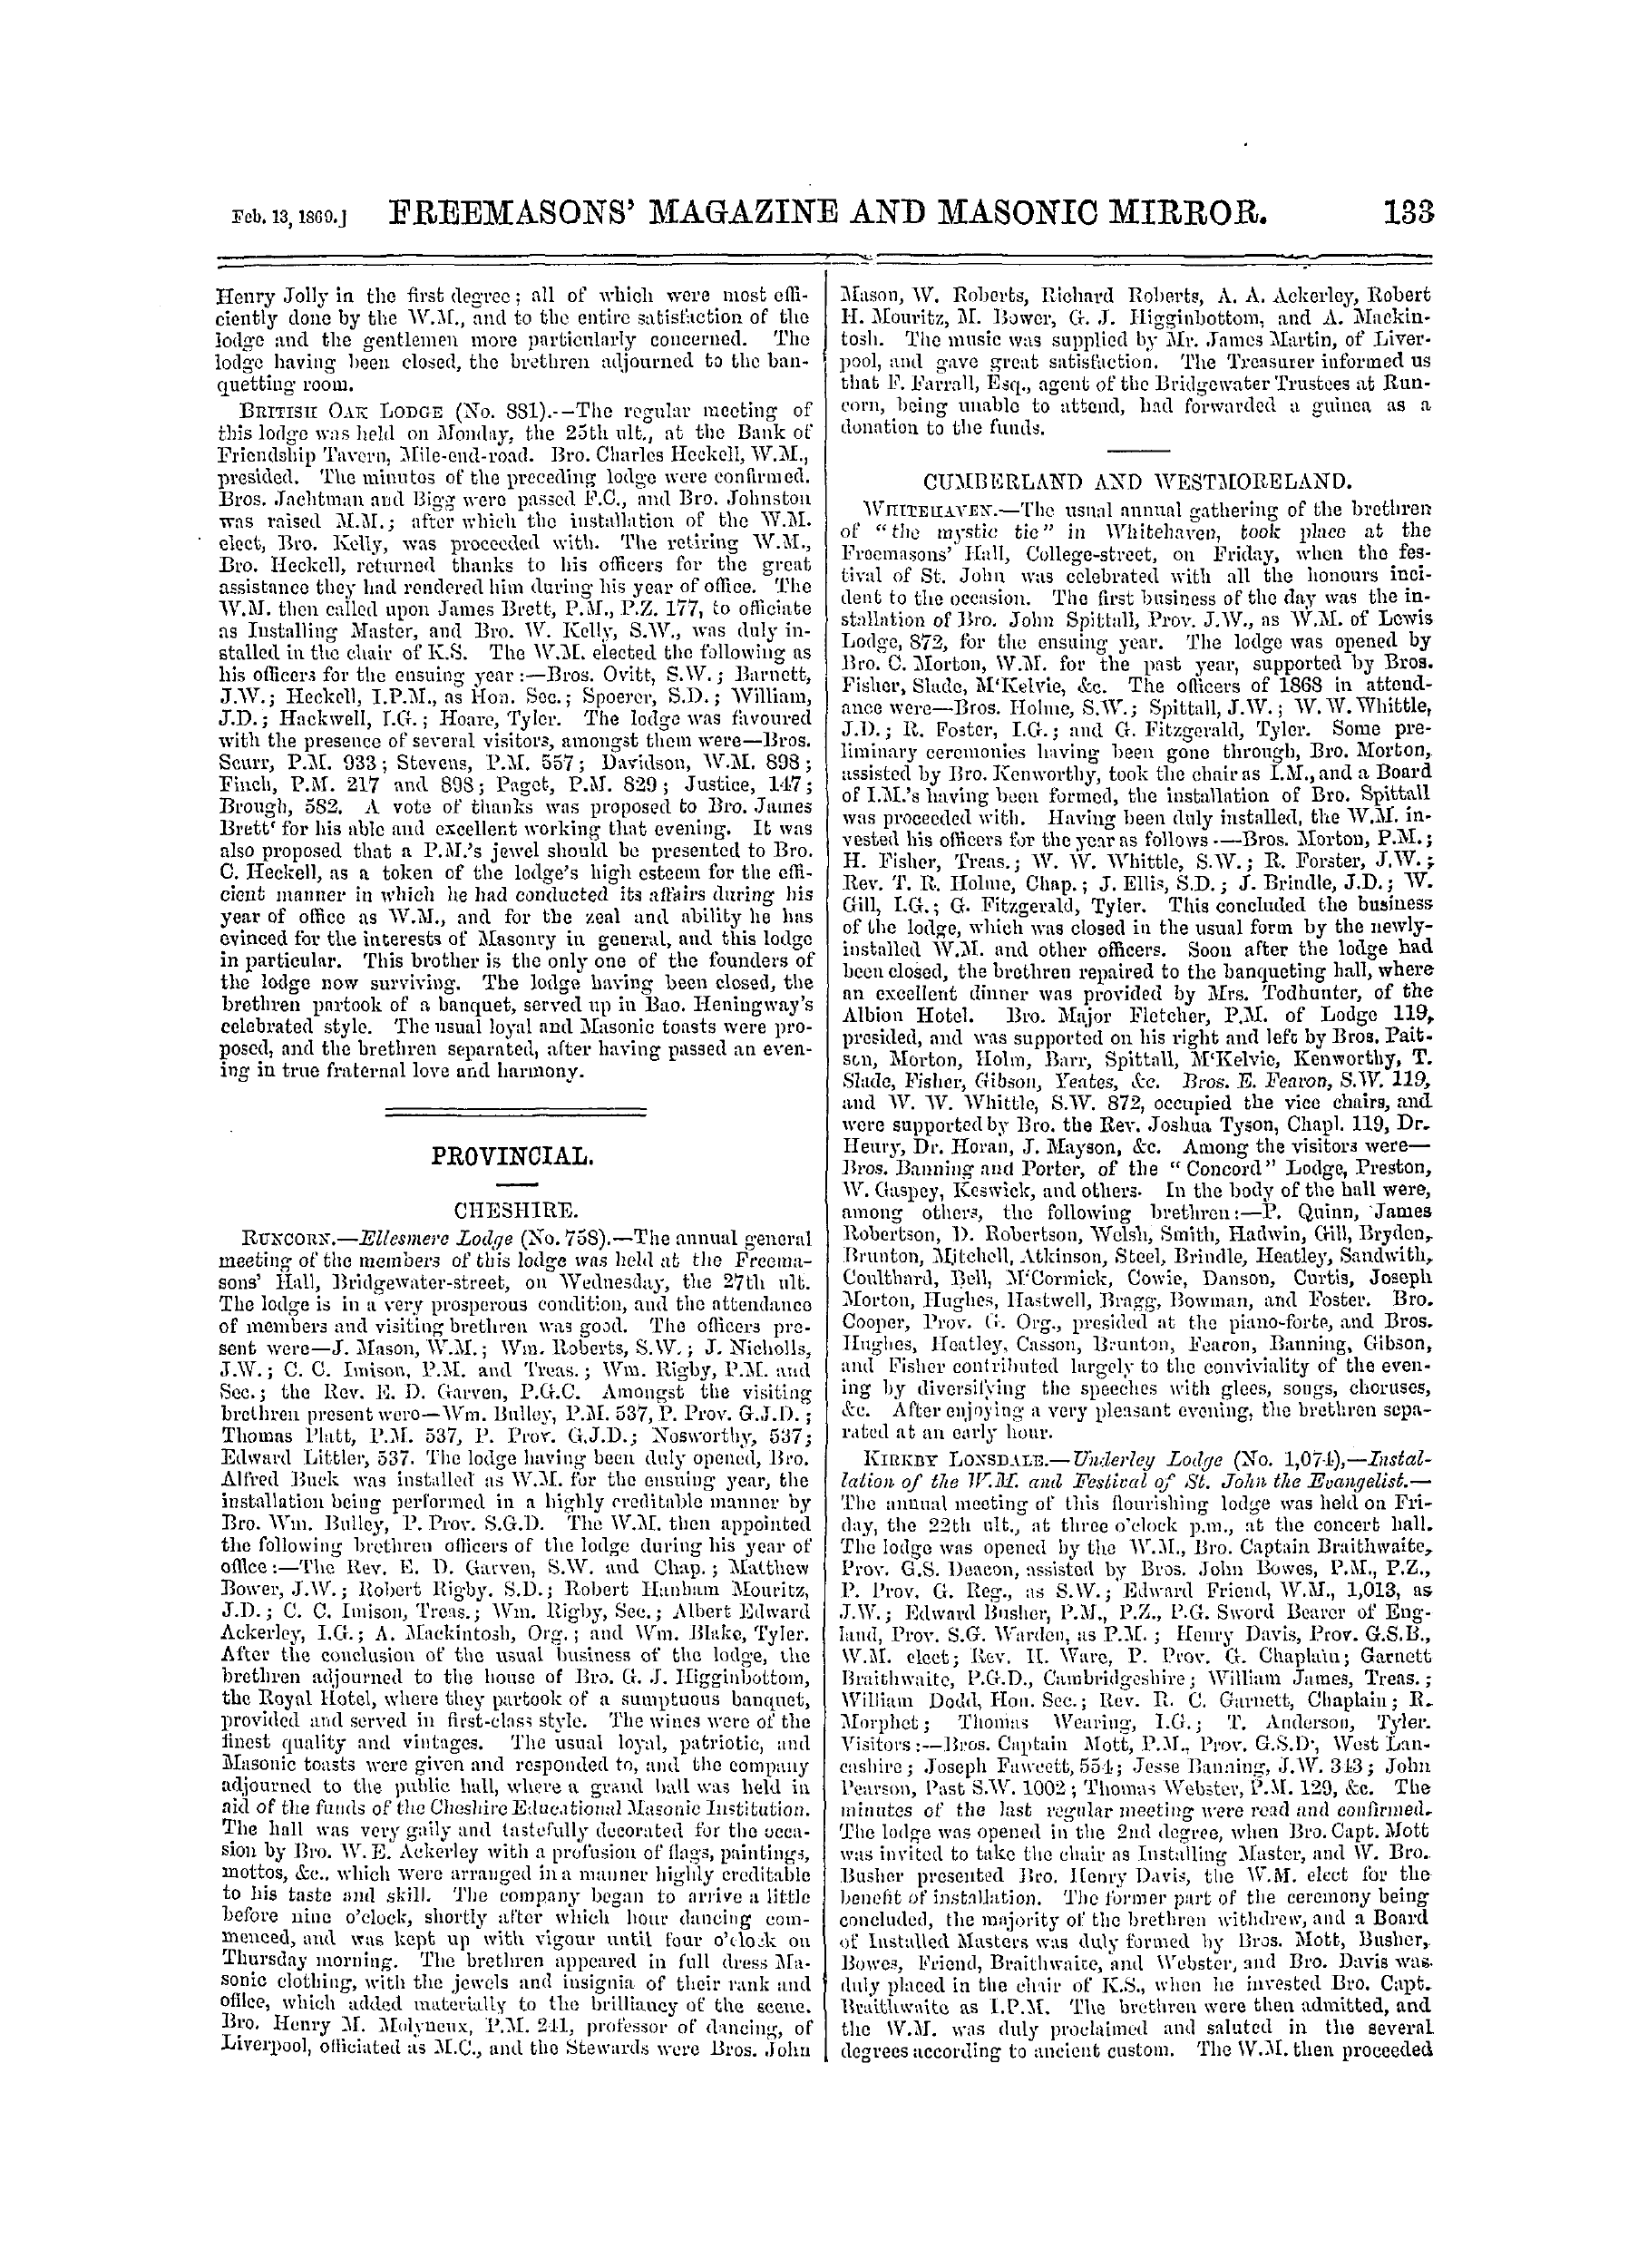 The Freemasons' Monthly Magazine: 1869-02-13 - Provincial.